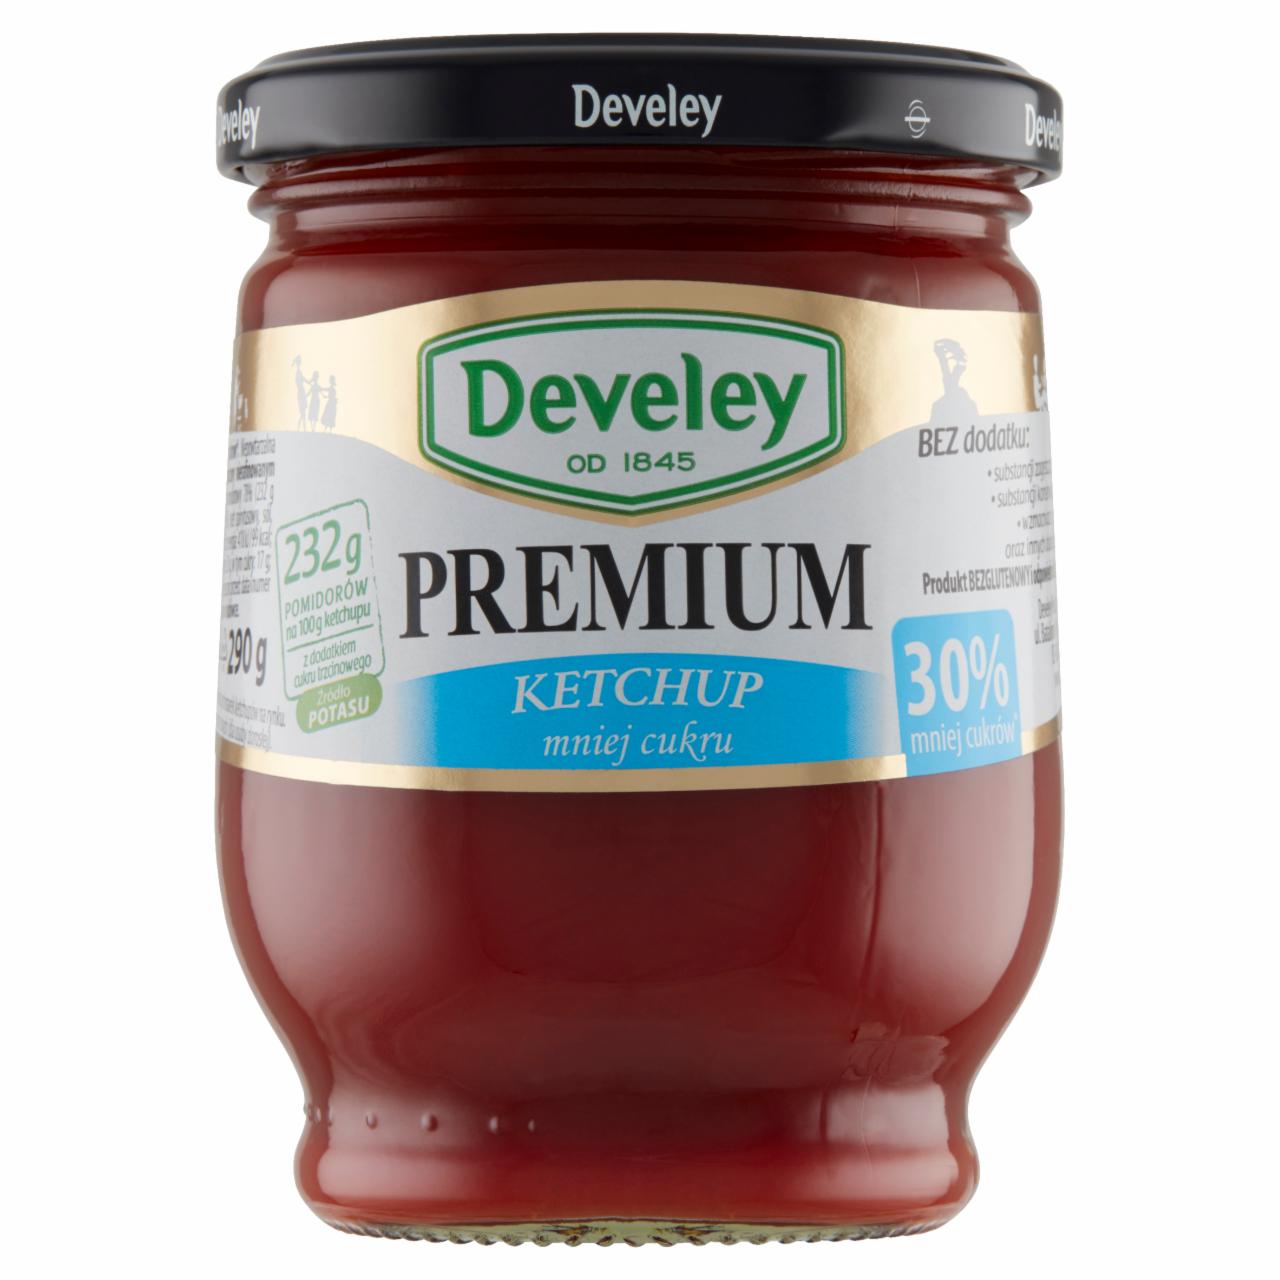 Zdjęcia - Develey Premium Ketchup mniej cukru 290 g